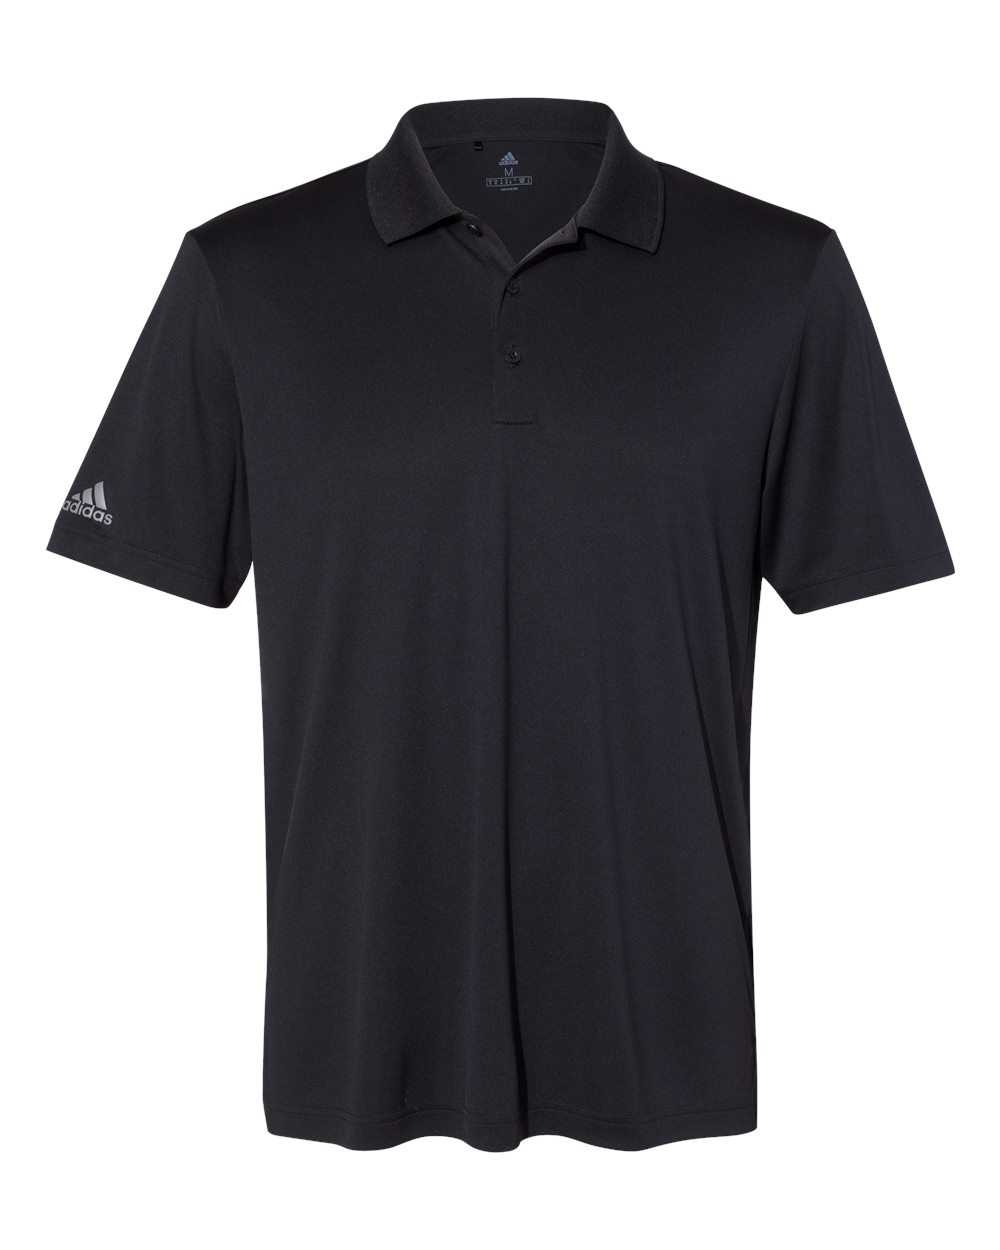 Adidas A230 Performance Sport Shirt - Black - HIT a Double